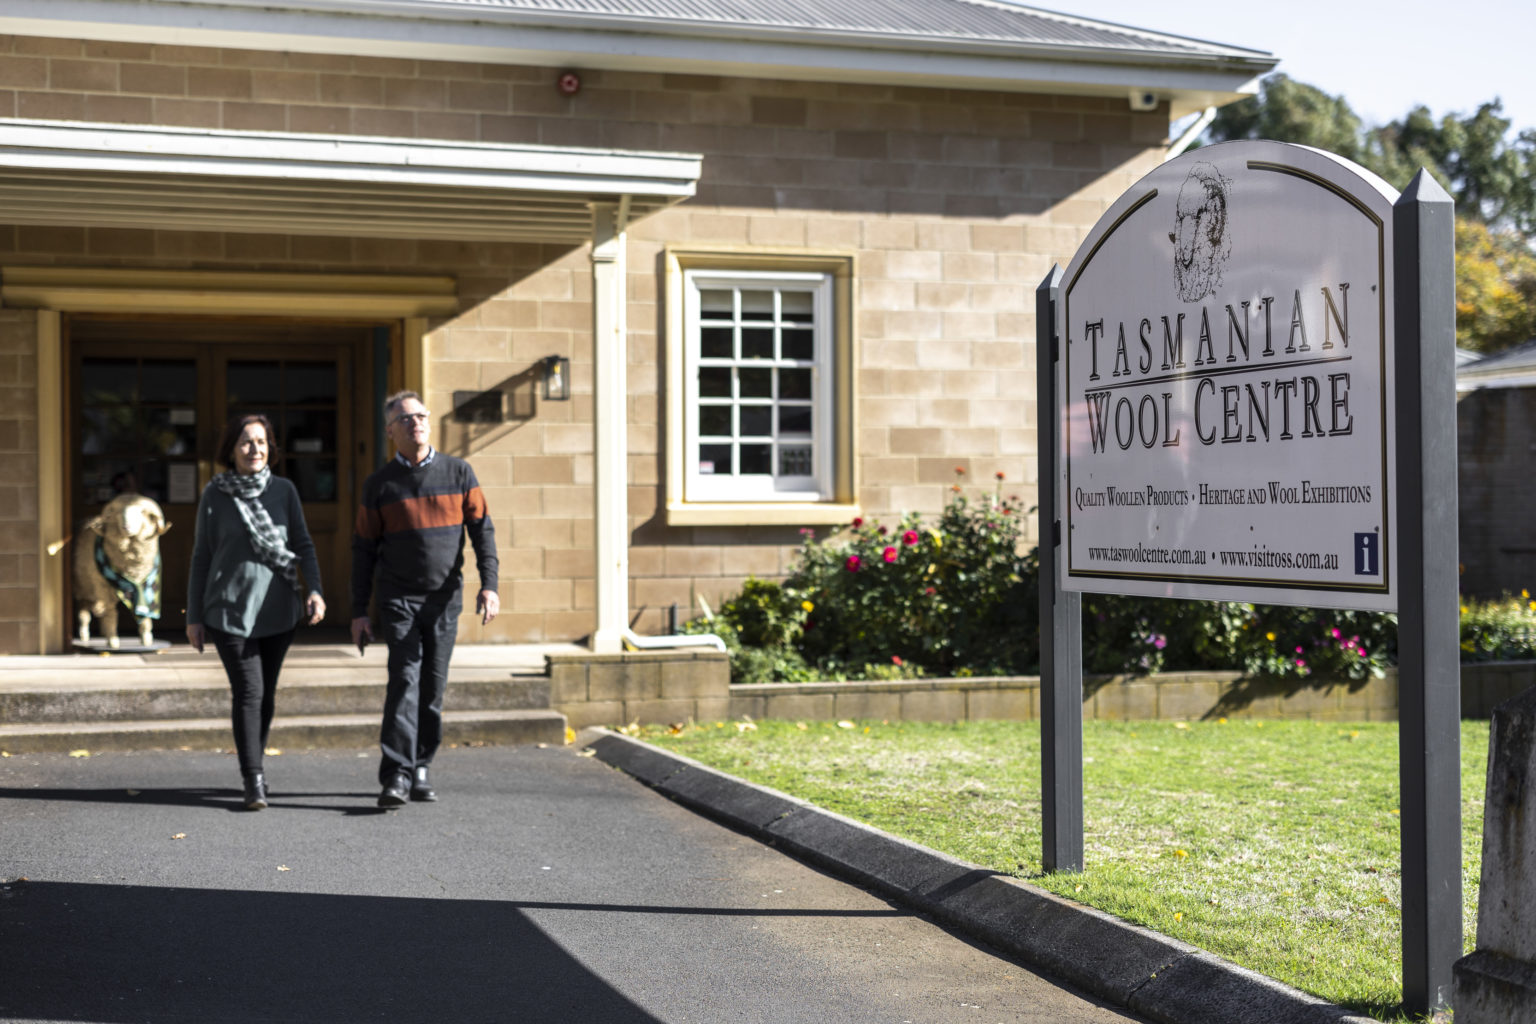 Tasmanian Wool Centre. Image Credit: Tourism Australia